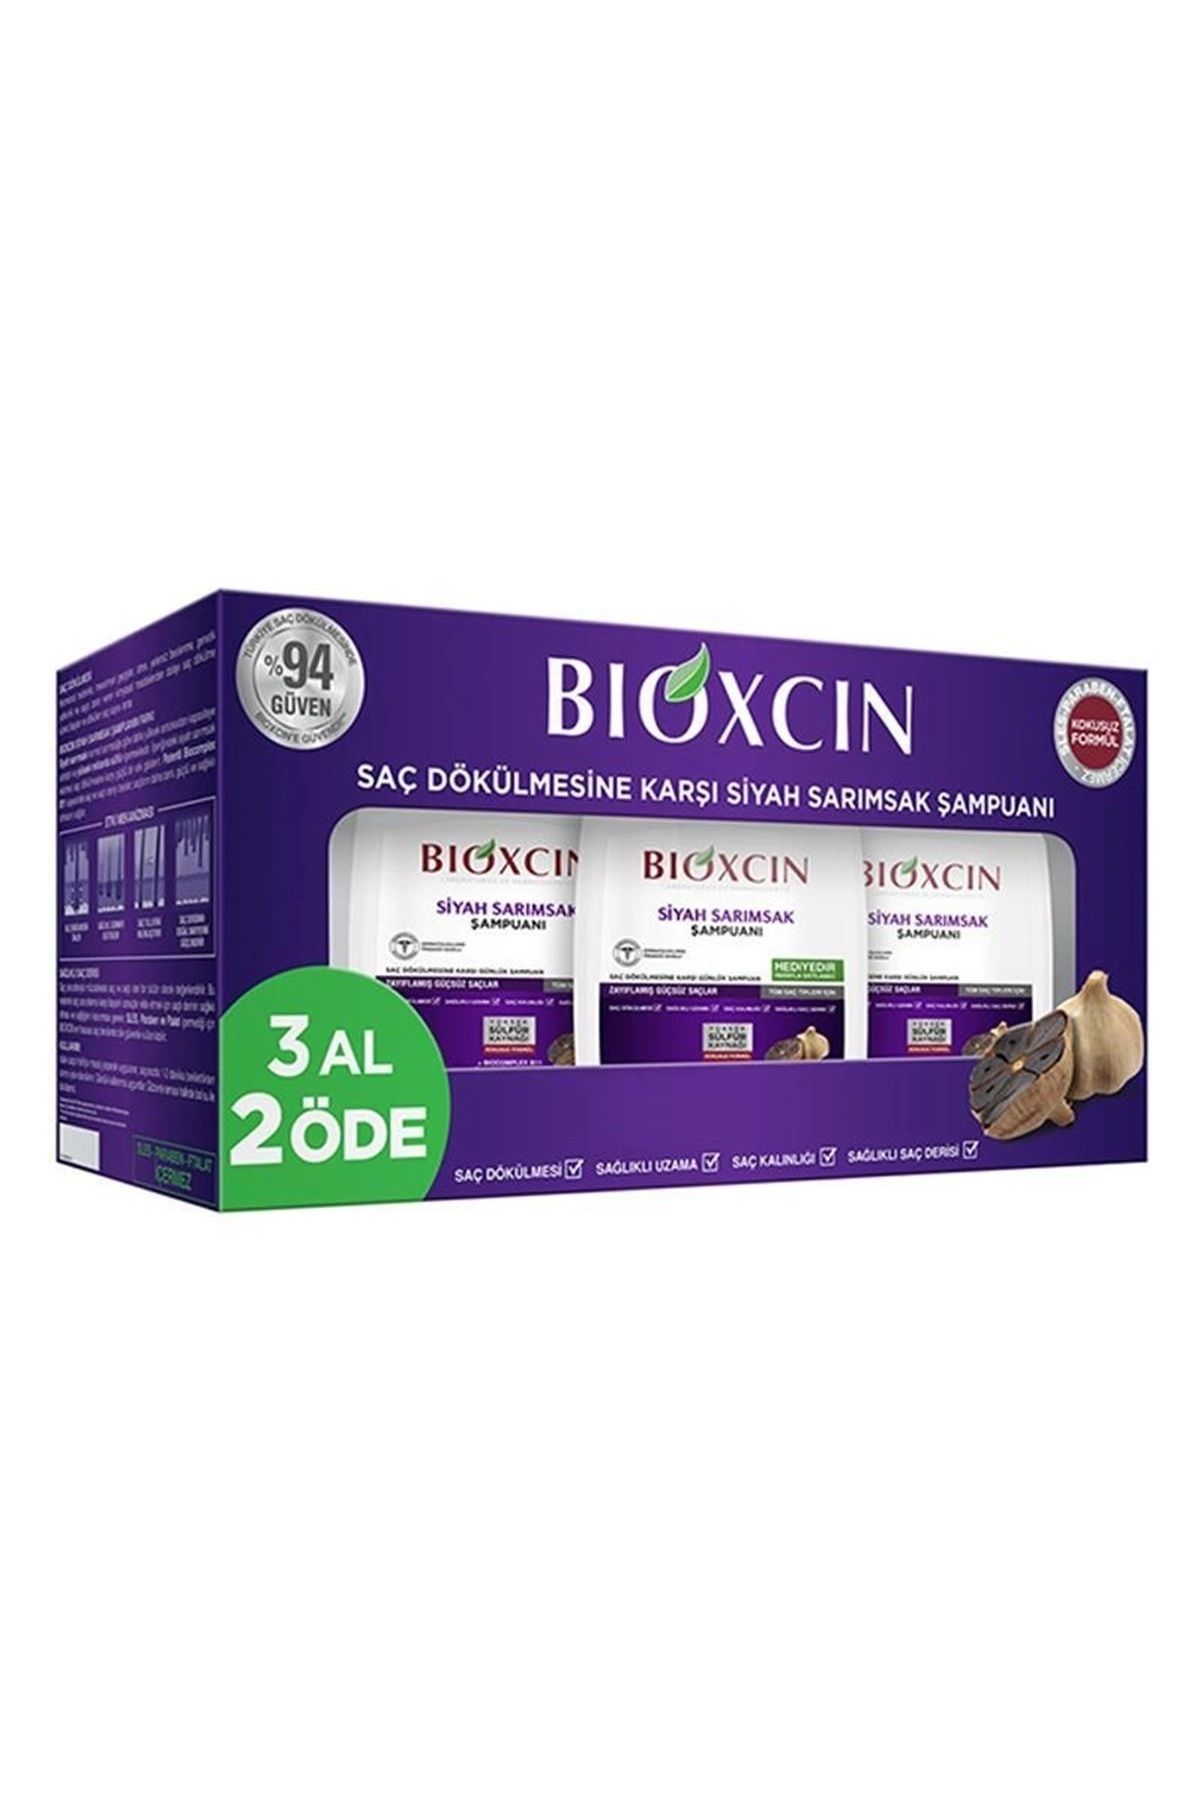 Bioxcin Bıoxcın Siyah Sarımsaklı Şampuan 3 Al 2 Öde 2'li Paket